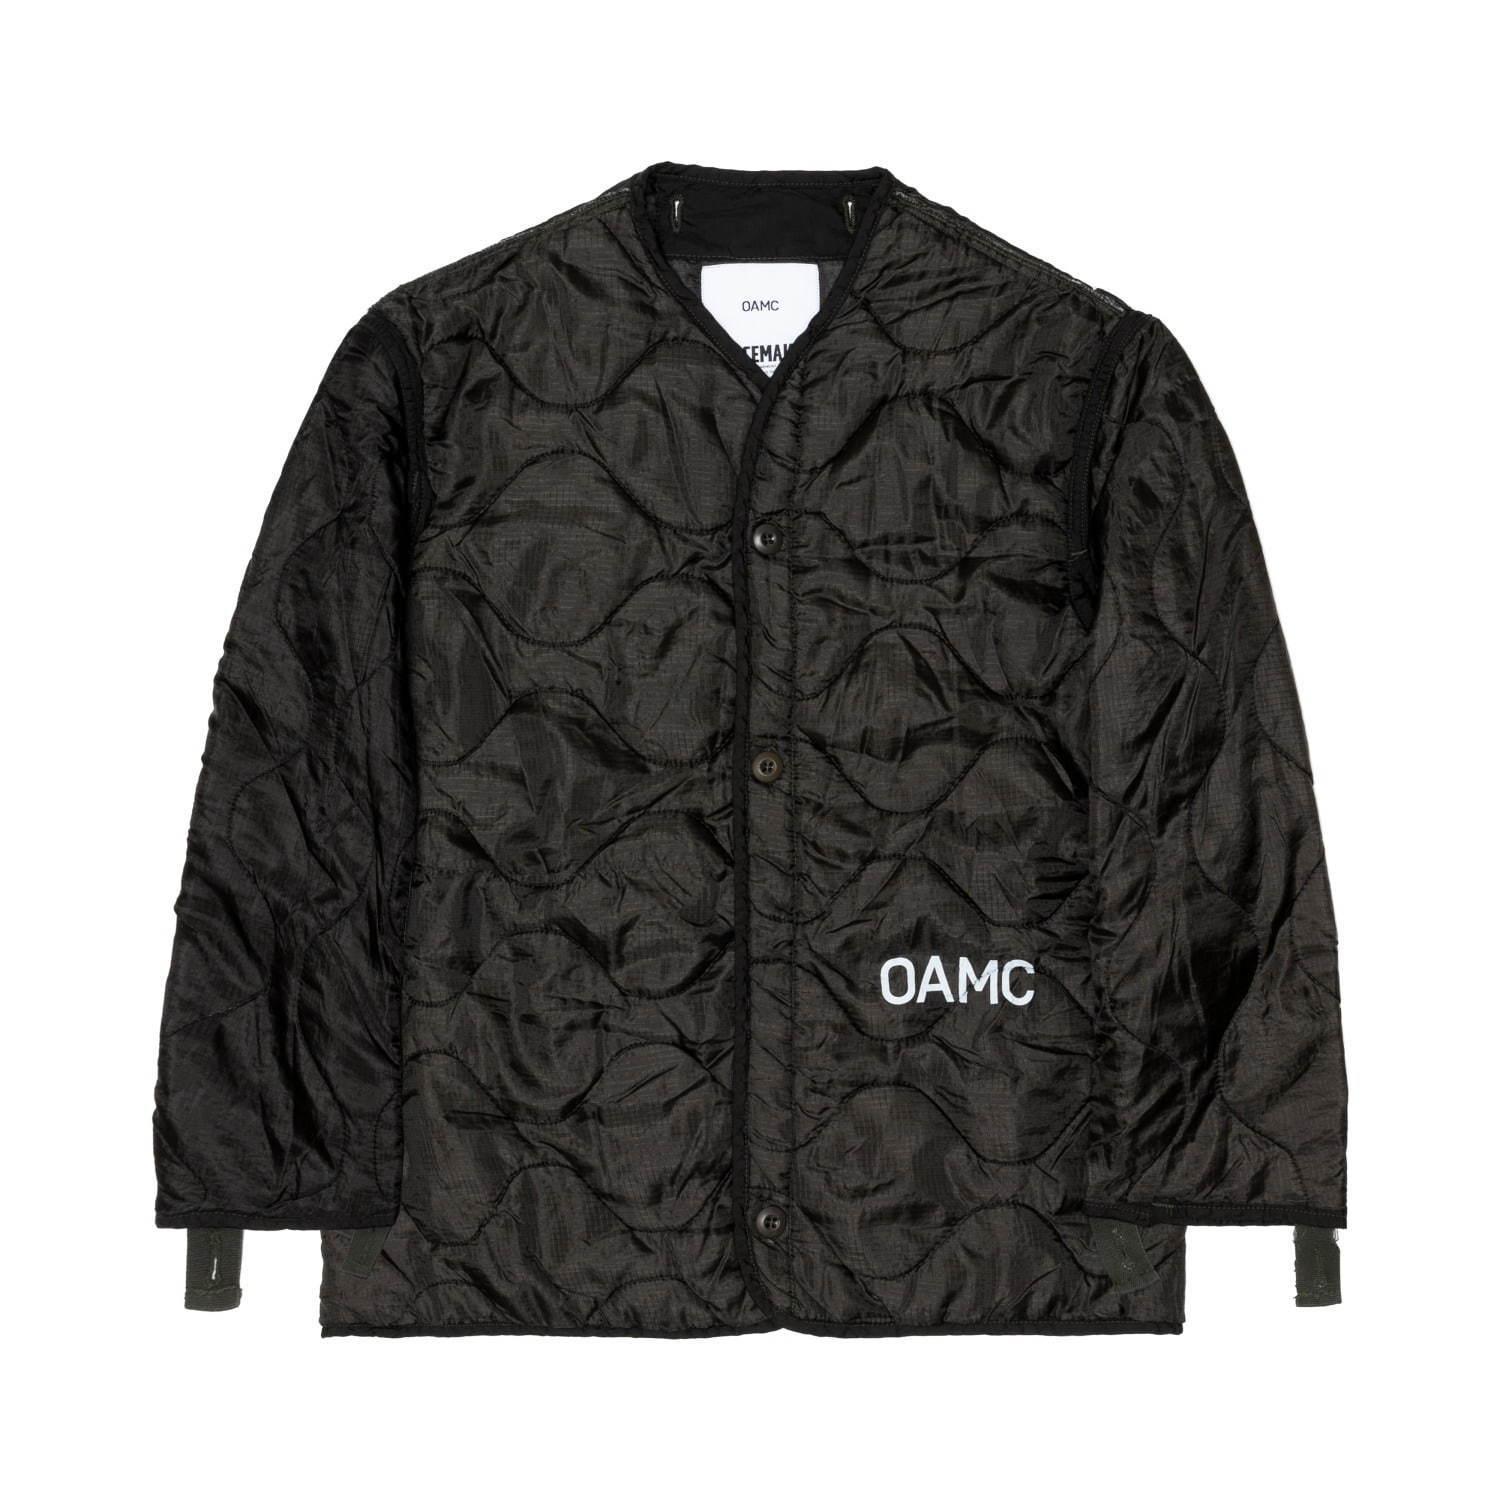 OAMC写真家・森山大道のアートワークを配したヴィンテージジャケット、ドーバー銀座限定で コピー